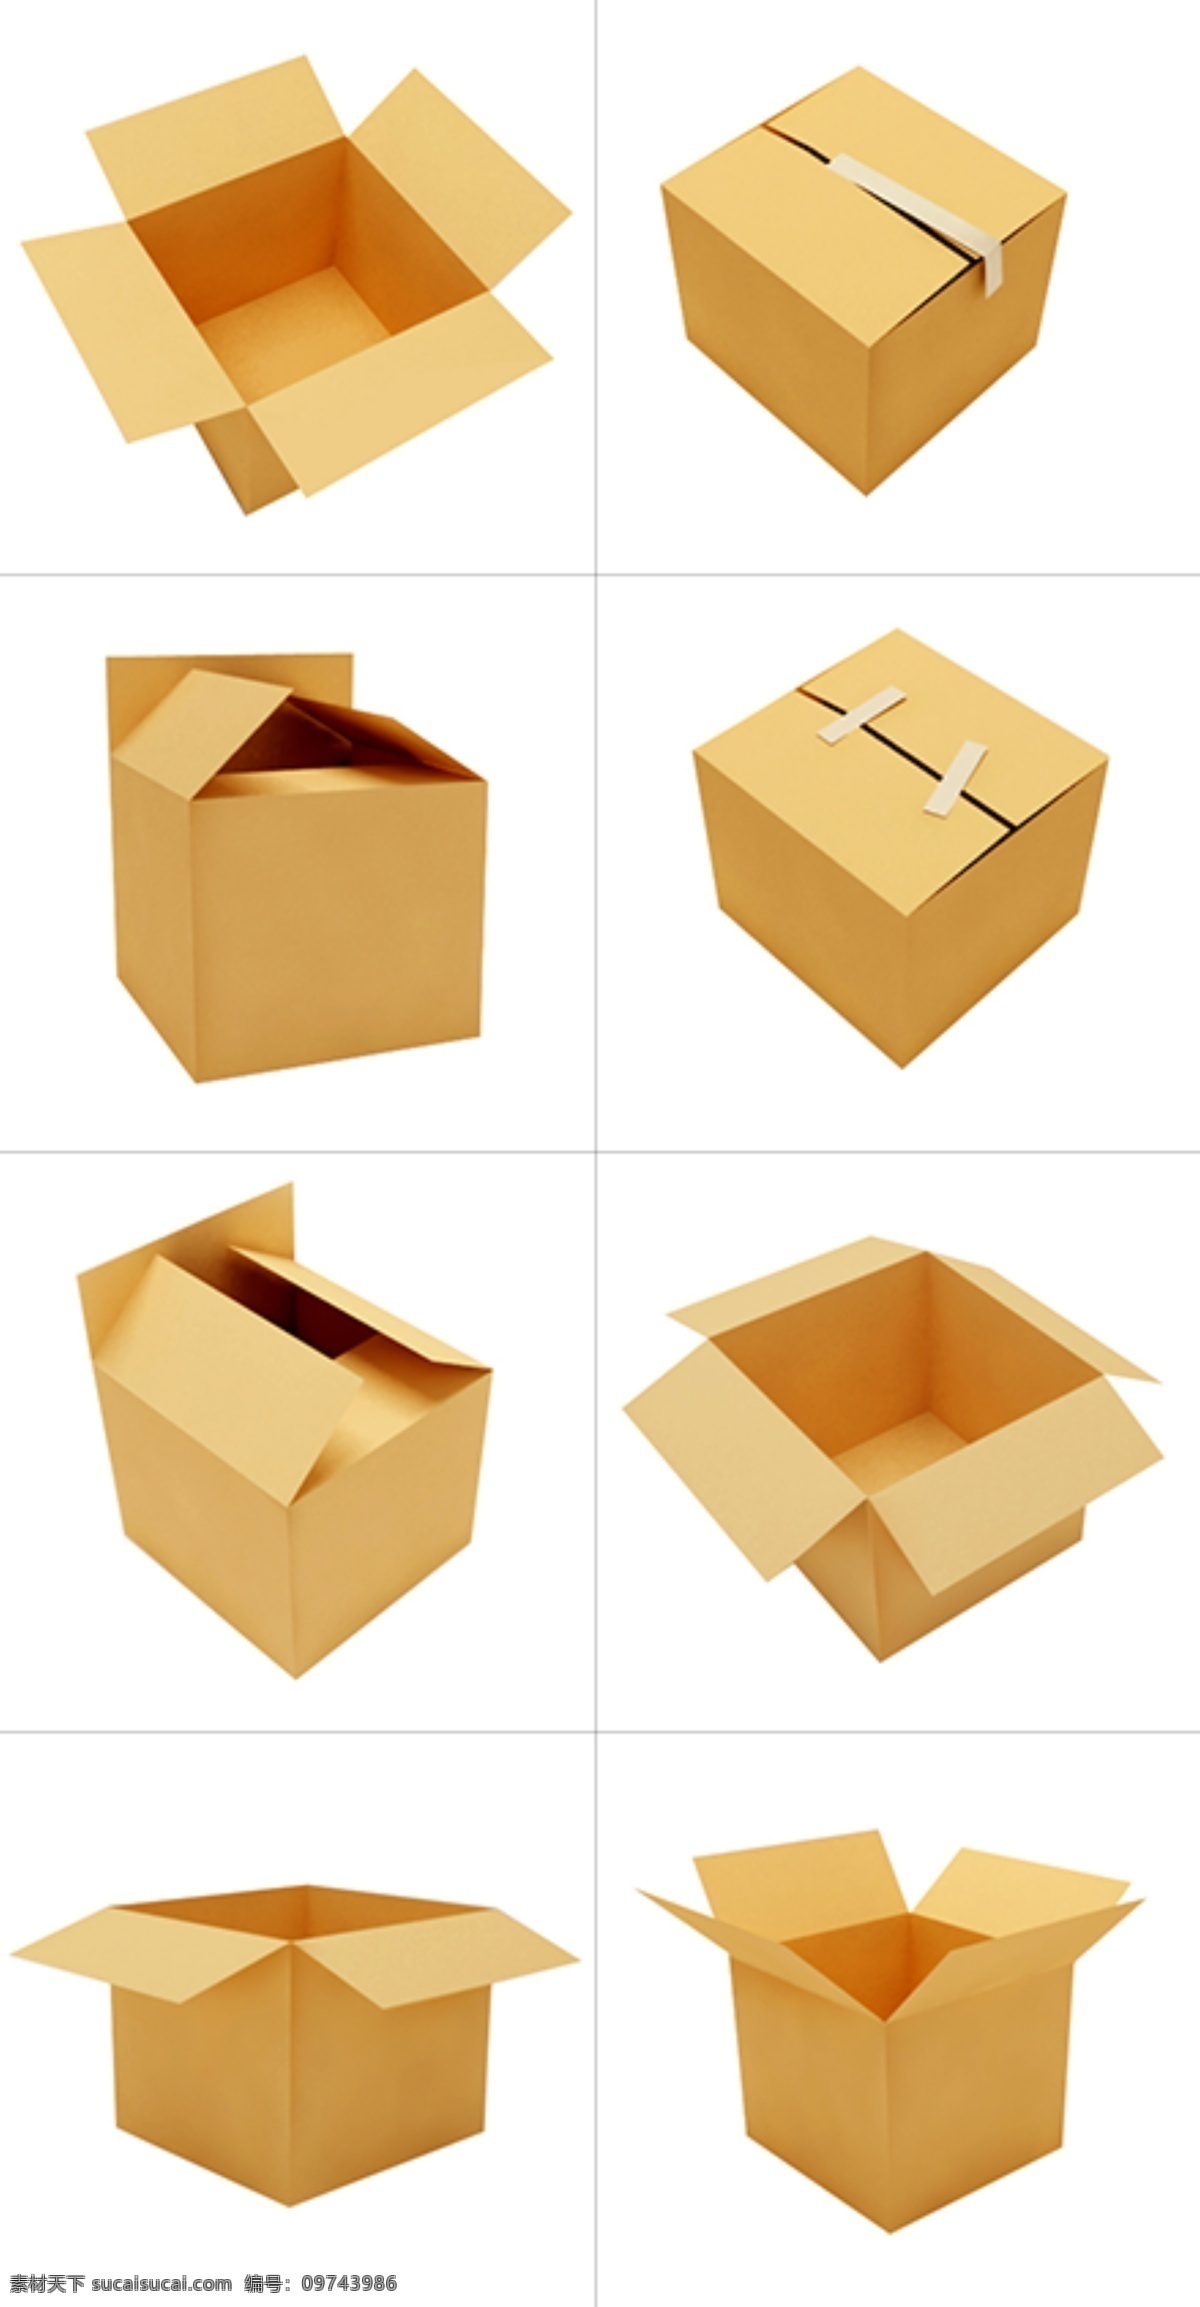 psd下载 组 角度 快递 箱子 简单 排列 清晰 一组 各角度 ui设计 其他ui设计